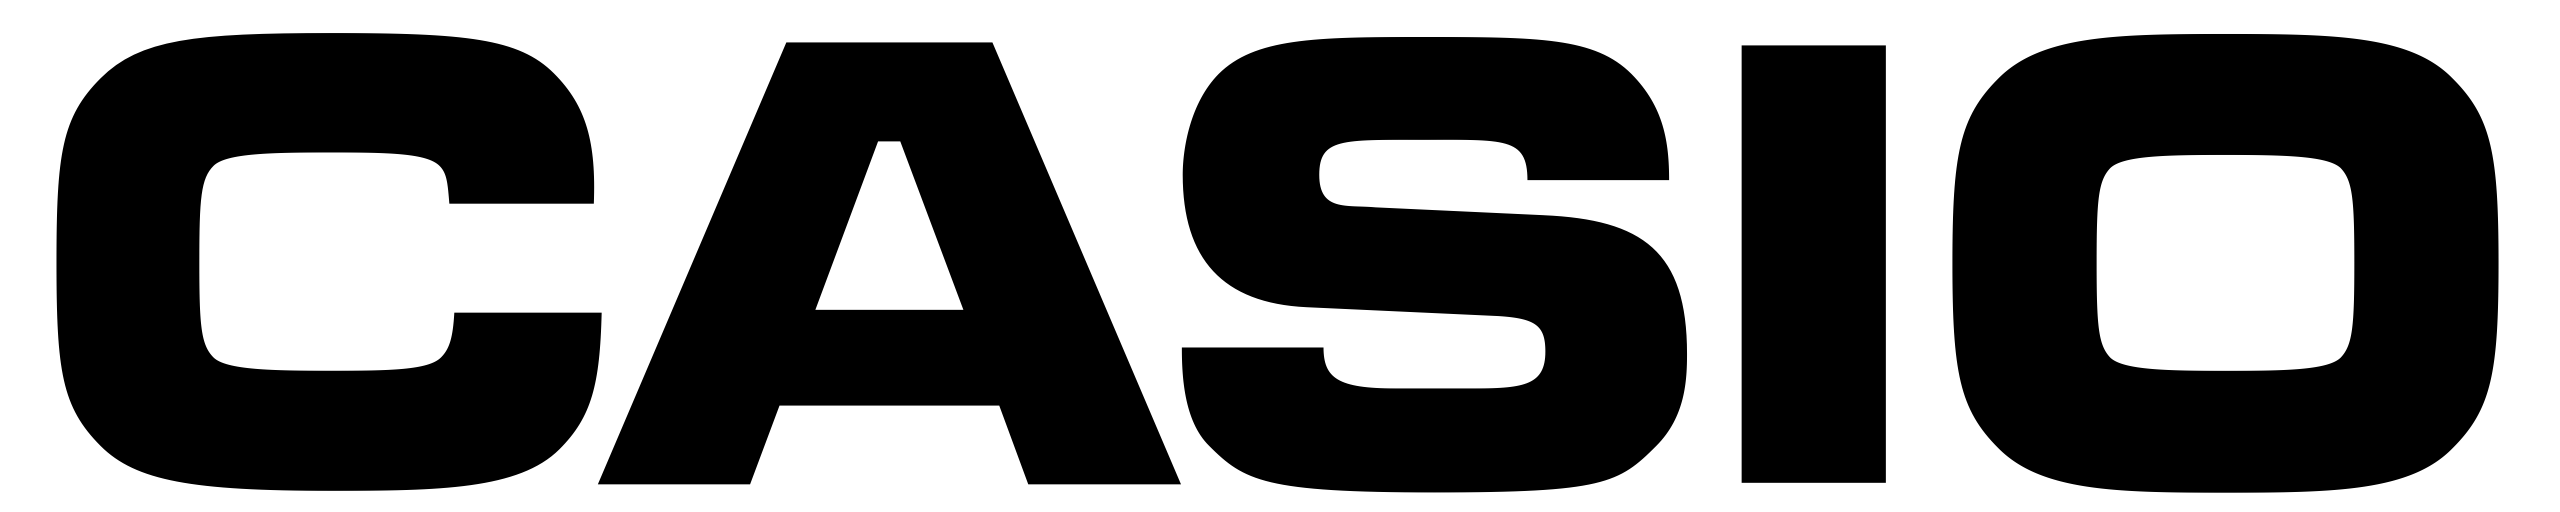 Casio Logo PNG - 177057